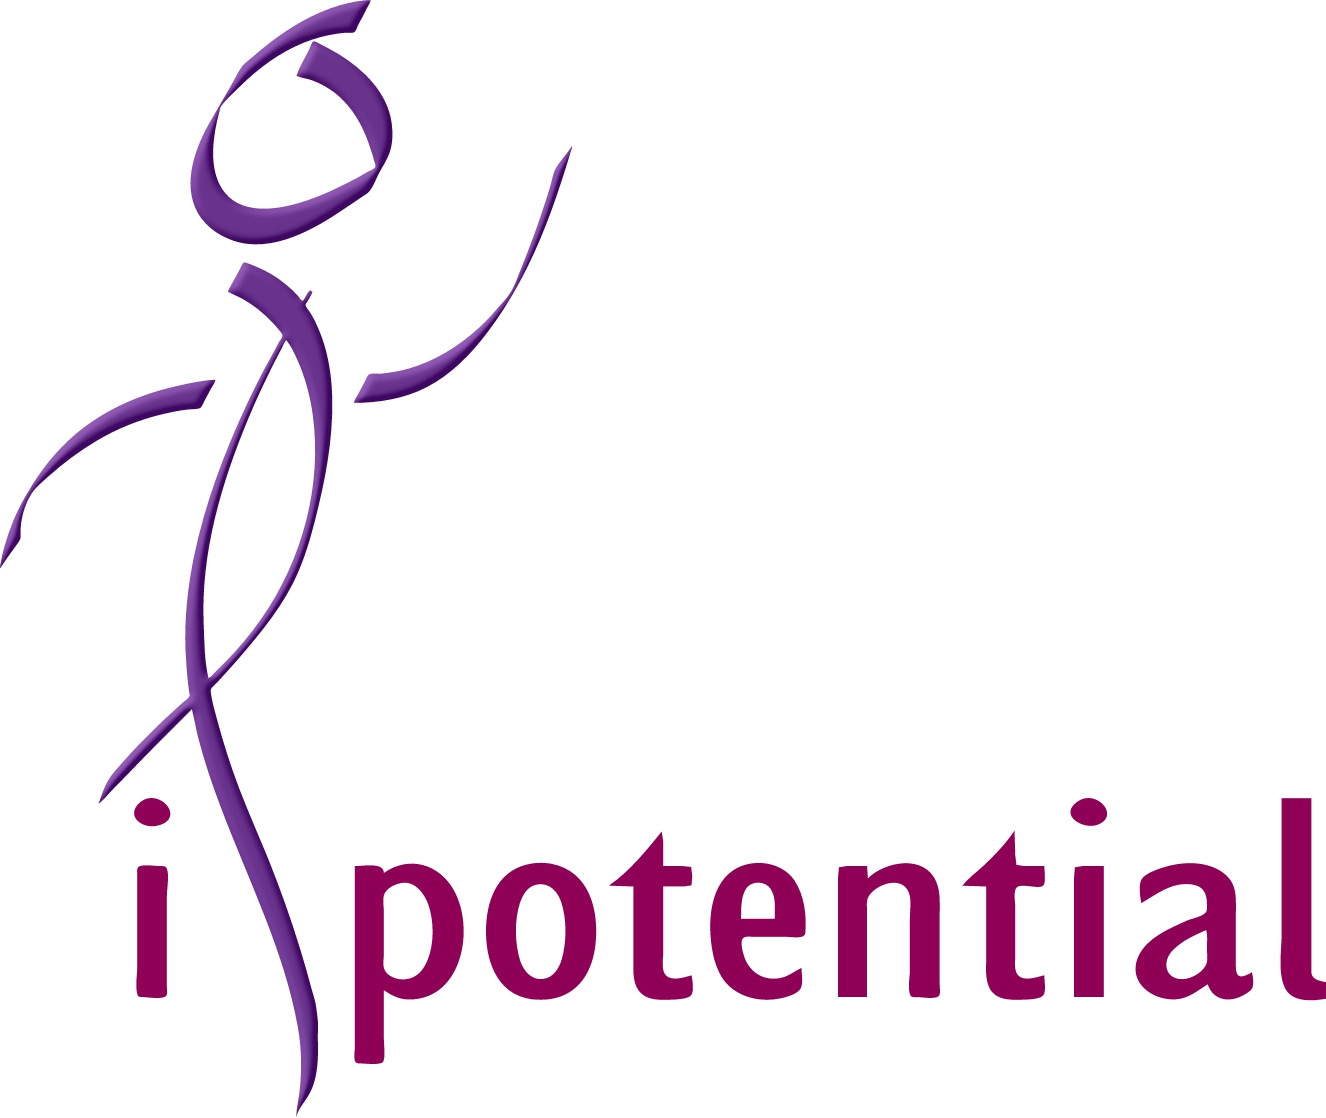 iPotential Ltd